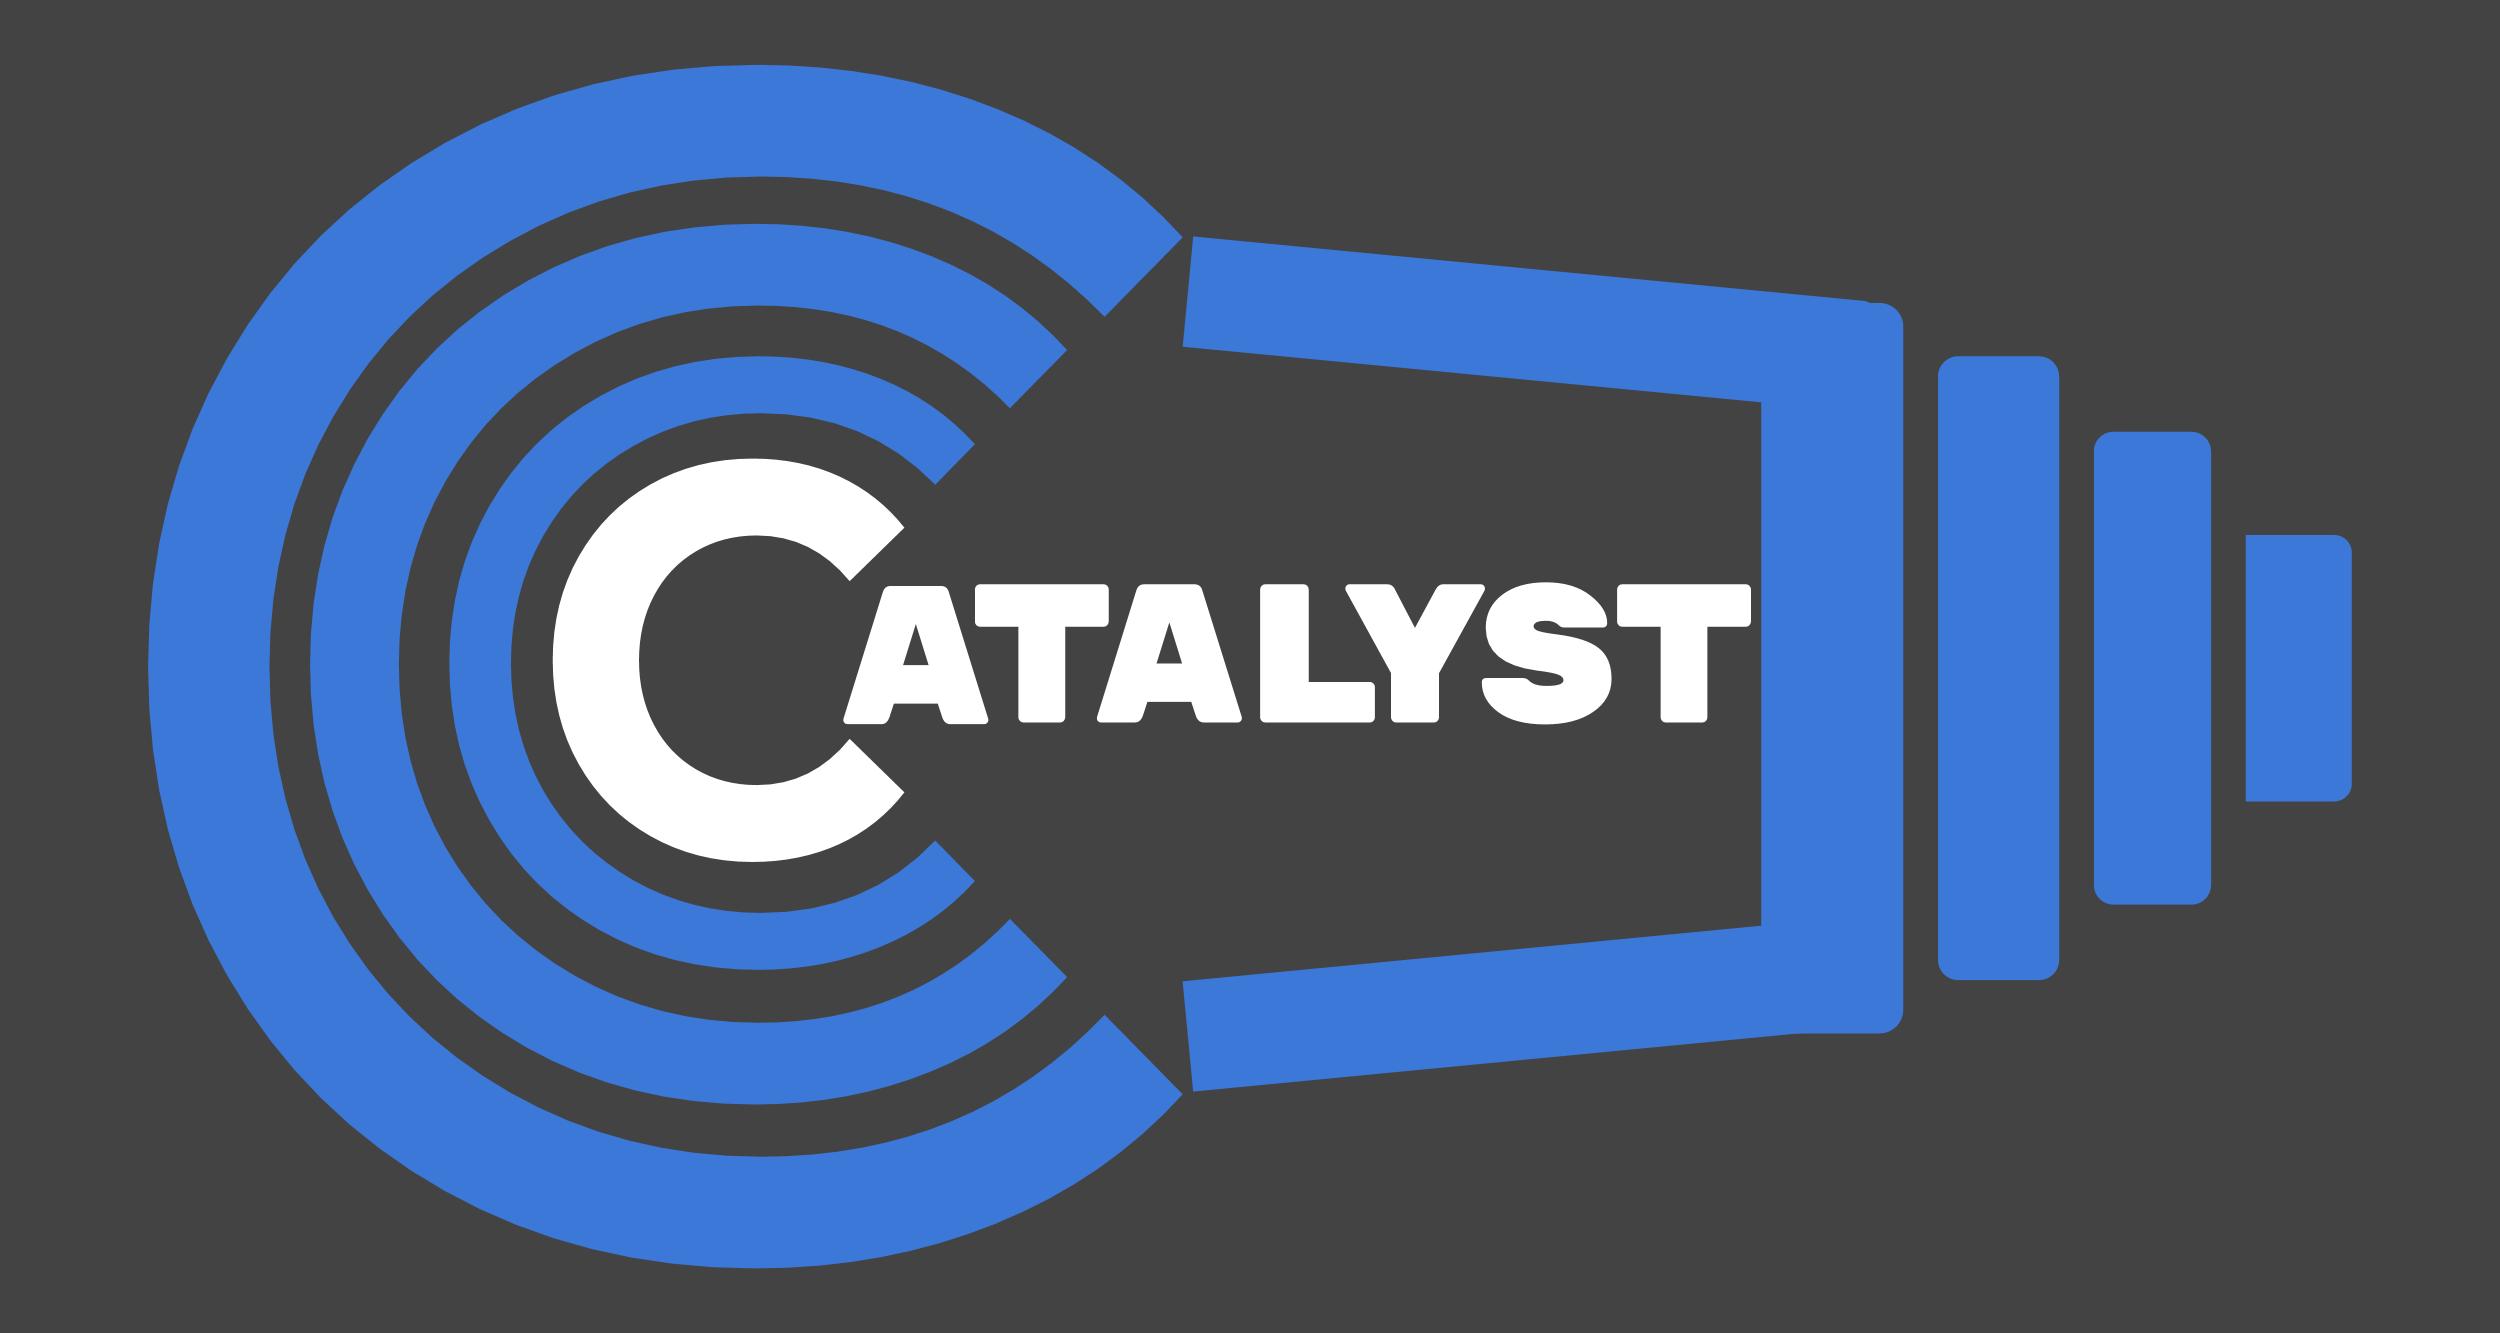 The Catalyst logo